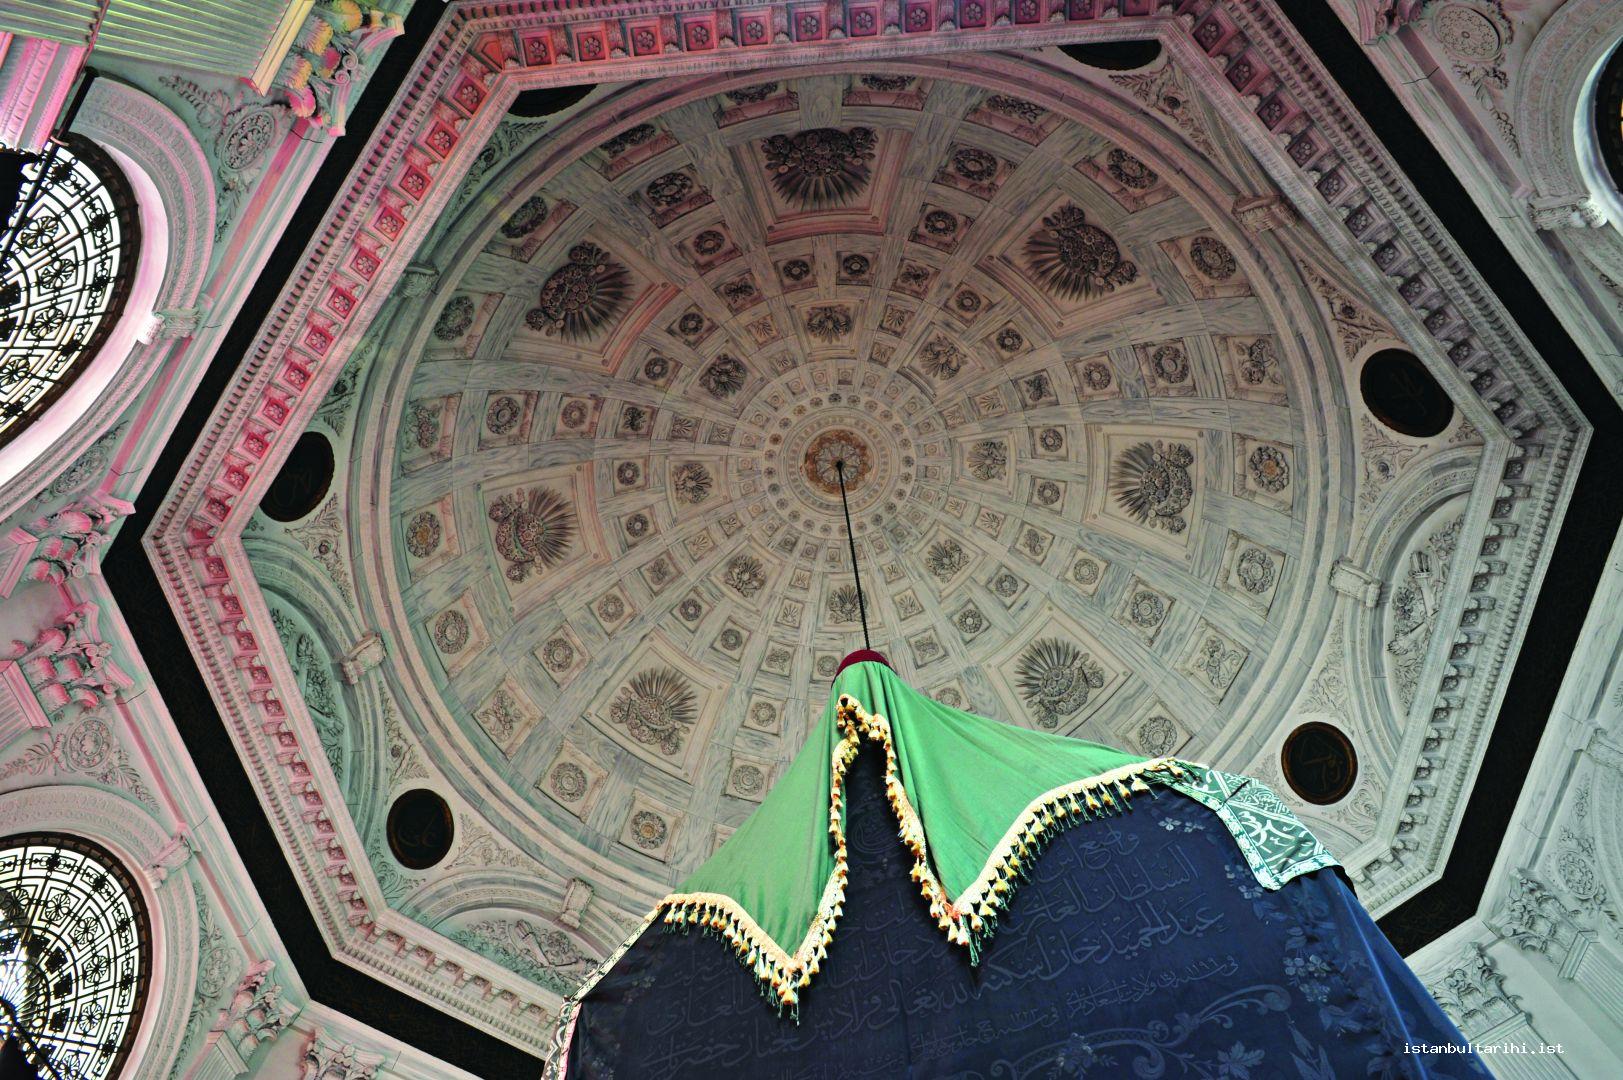 25- The tomb of Sultan Mahmud II